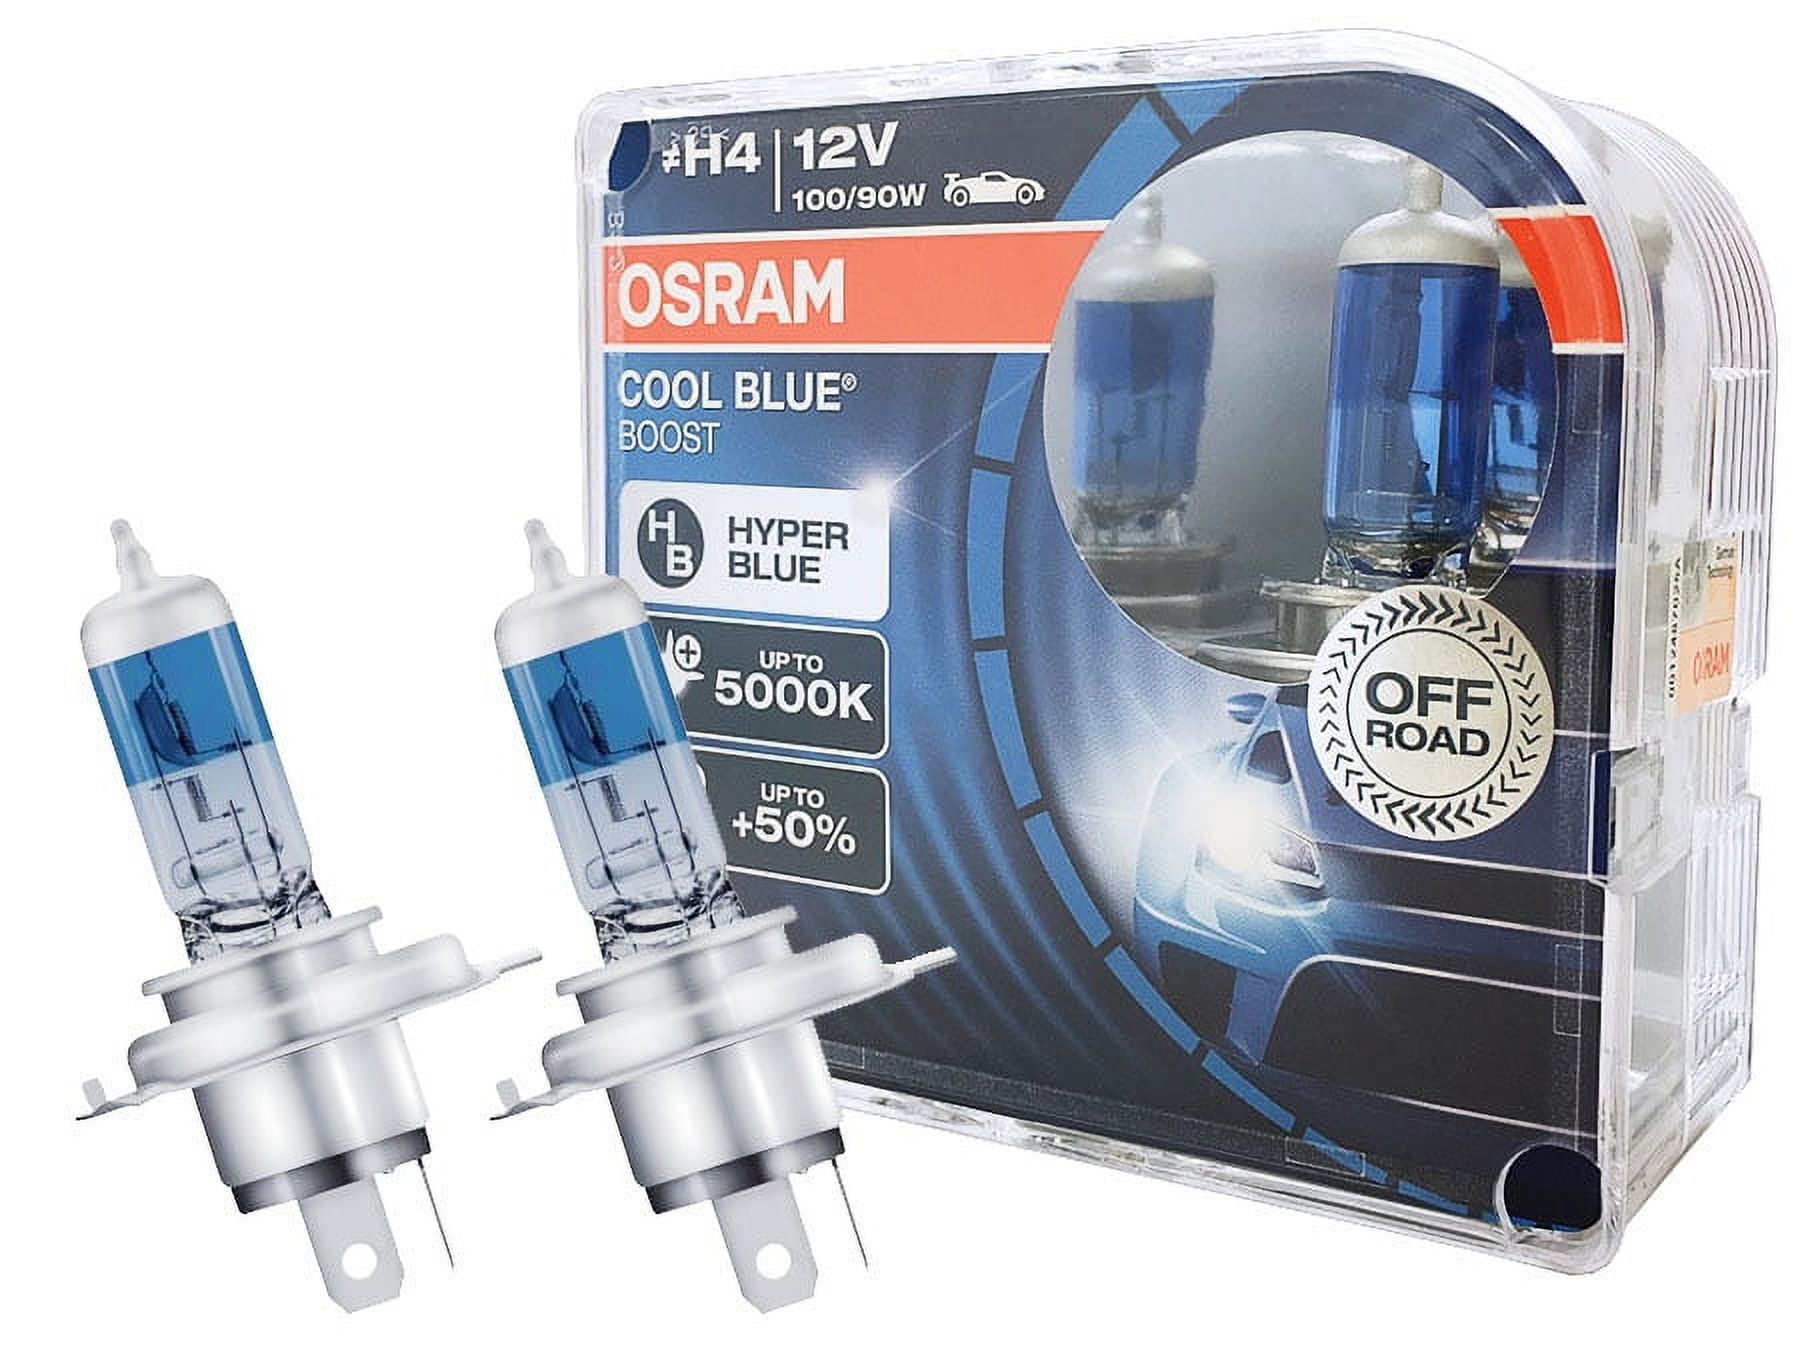 Kit lâmpada do farol - Osram - H8 - 12V - 35W - 4200K - Cool Blue